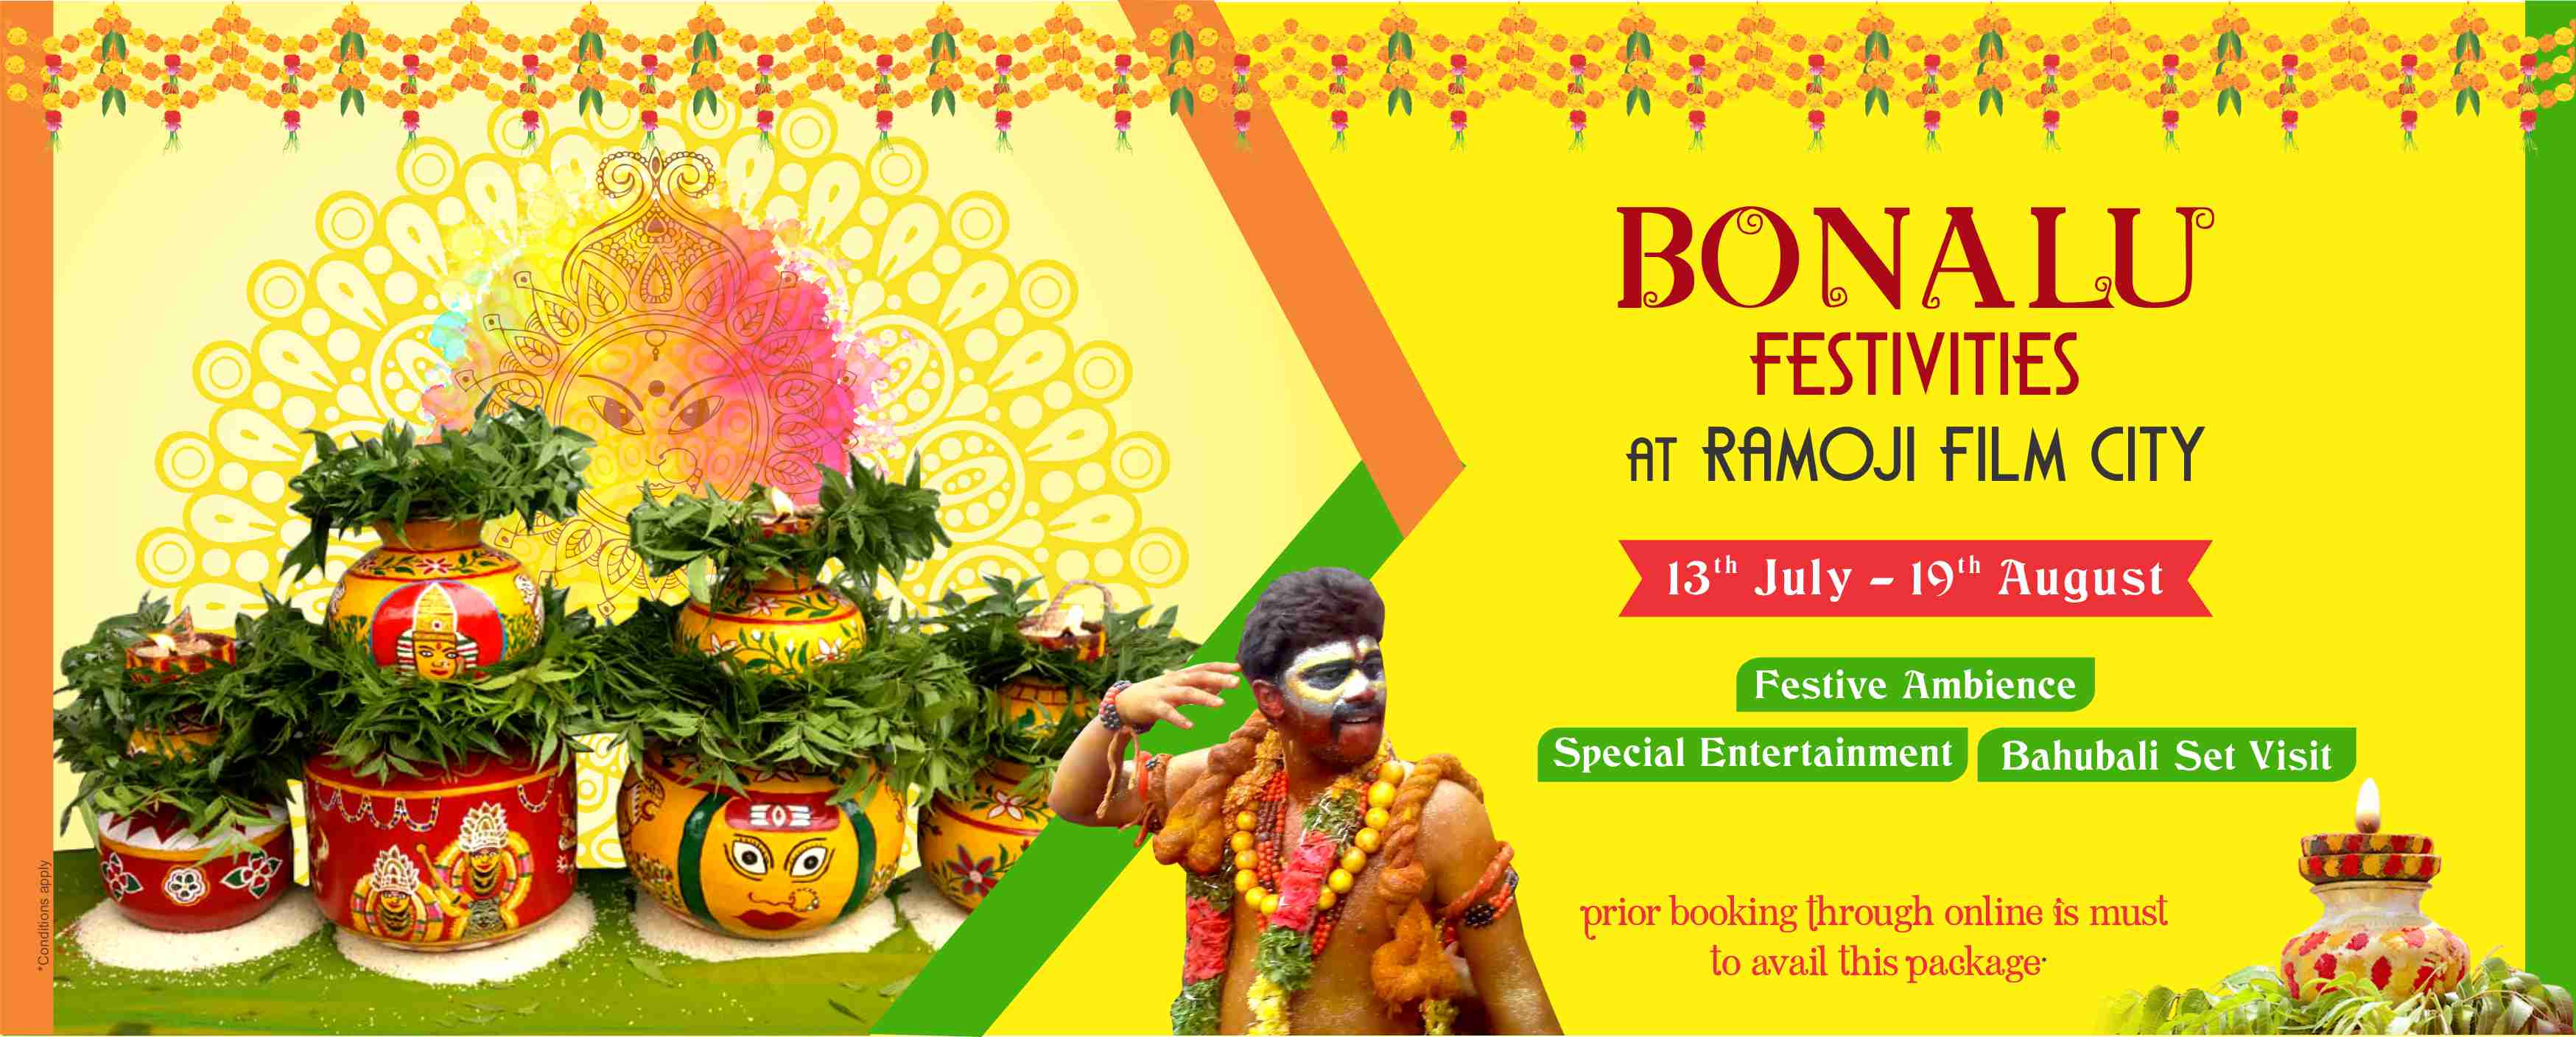 Bonalu Festive Day Tour at Ramoji Film City, Hyderabad, Telangana, India